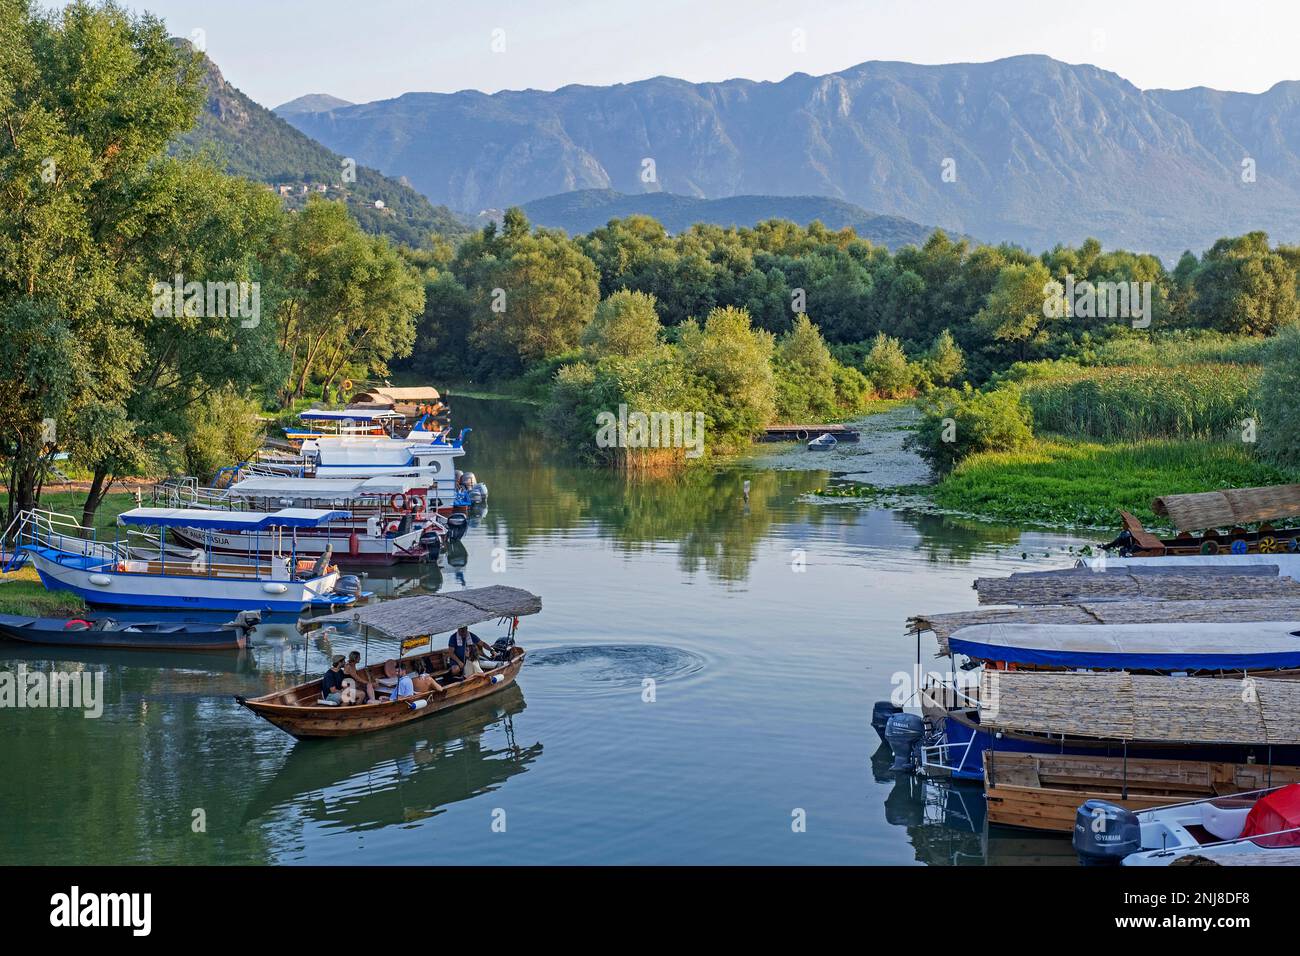 Tourist boats at Virpazar on the Crmnica river which flows into Skadar Lake, Skadarsko Jezero National Park, Crmnica region, Bar, Montenegro Stock Photo